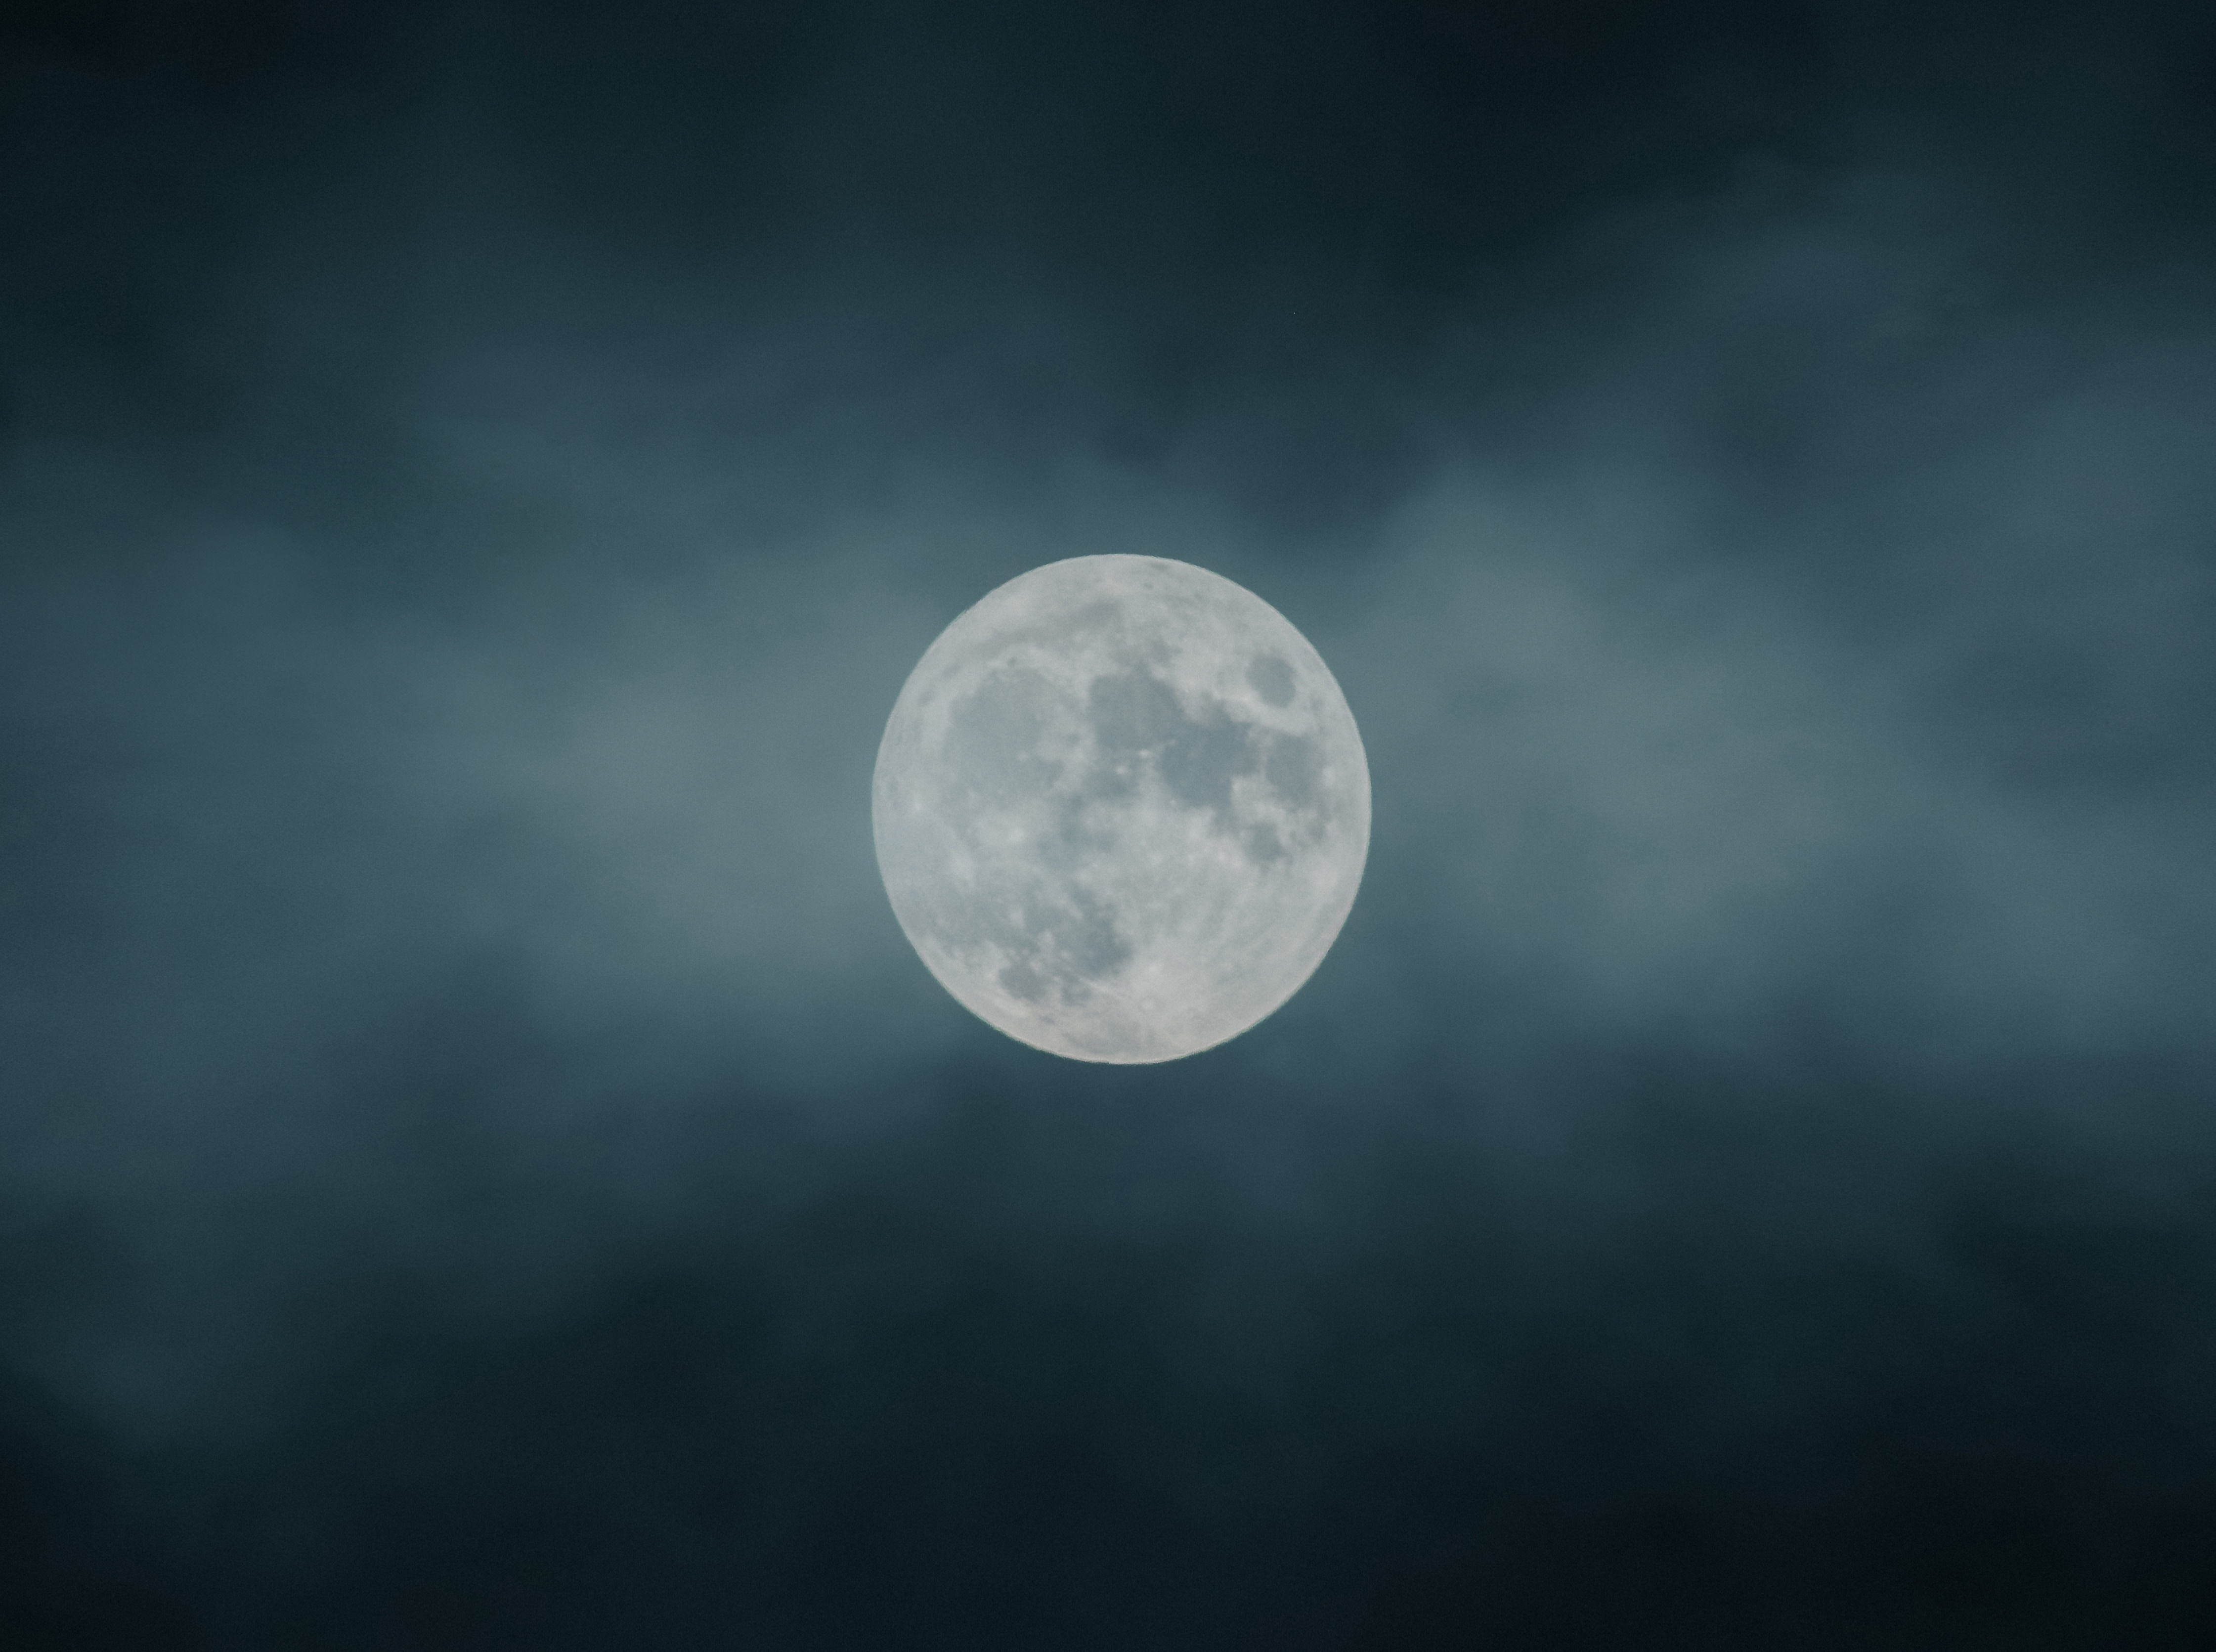 A full moon on a misty night.